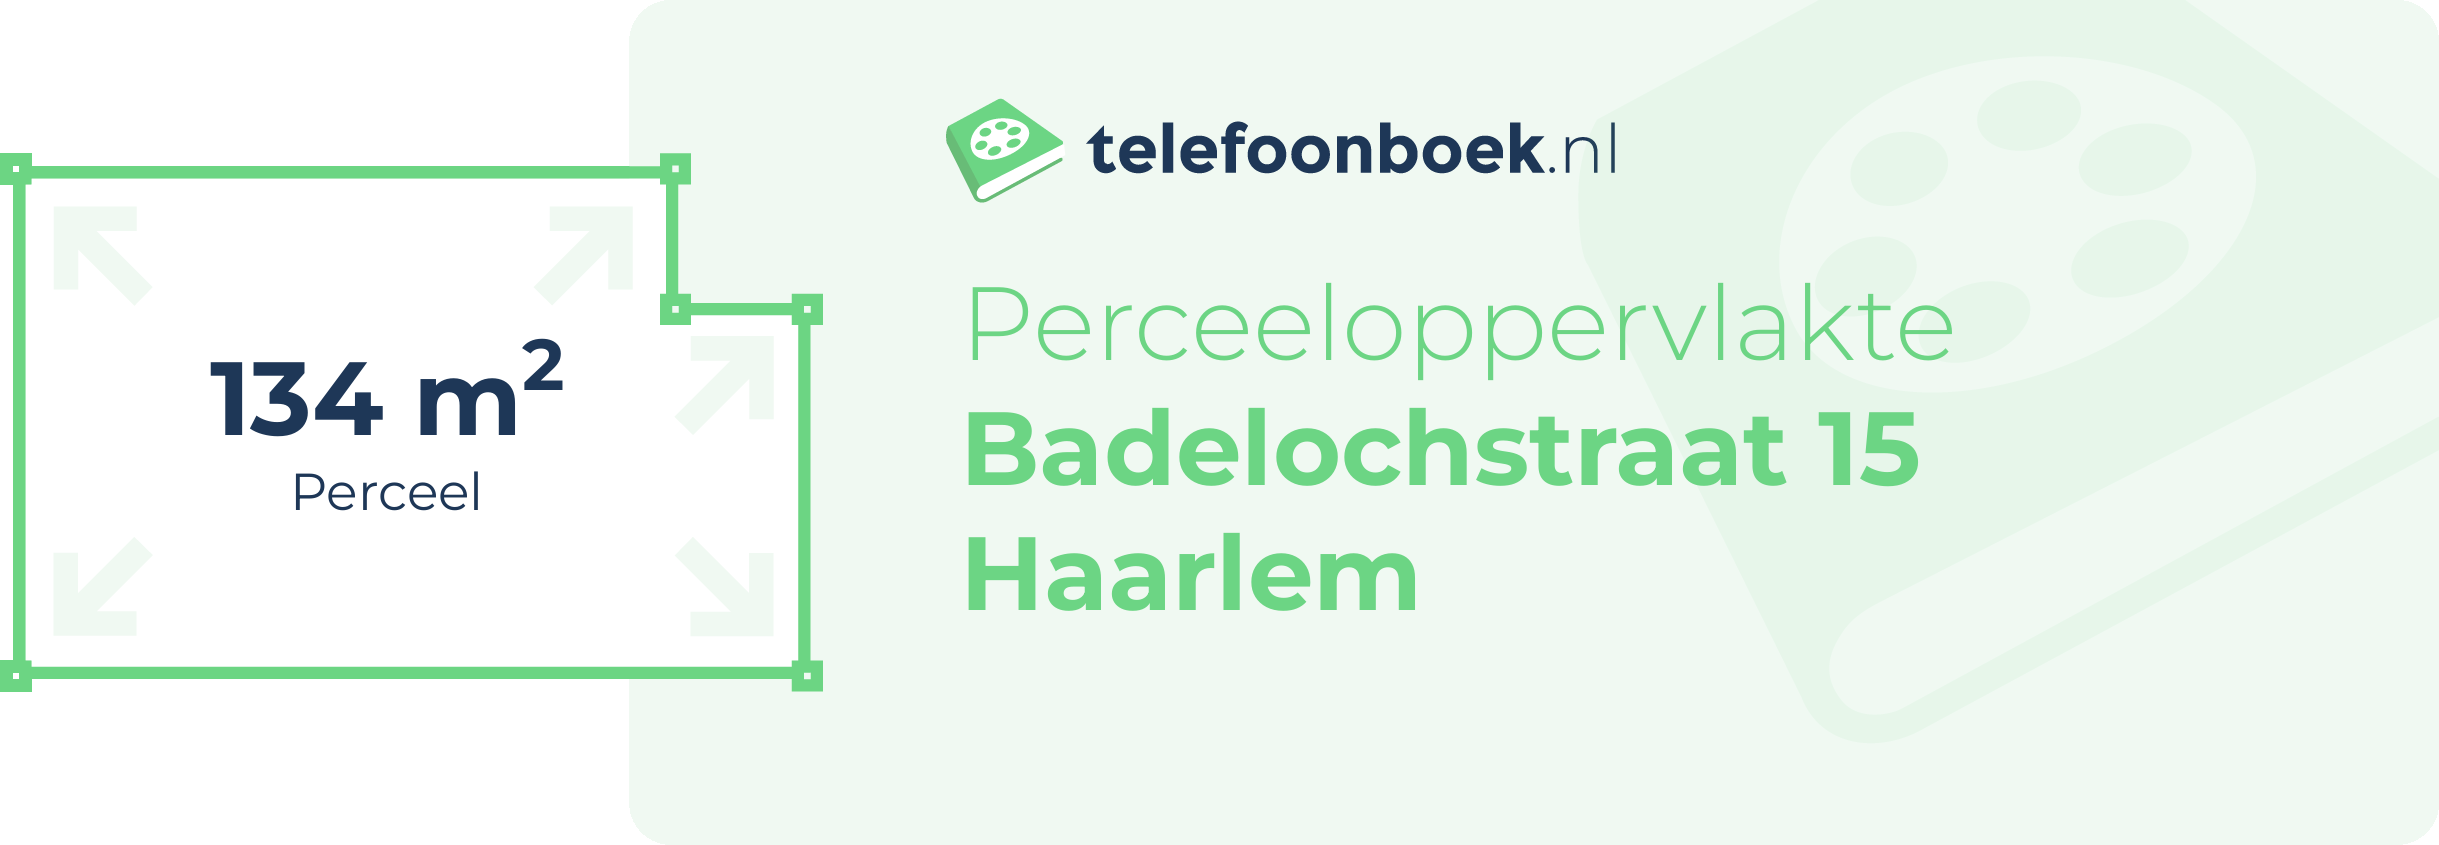 Perceeloppervlakte Badelochstraat 15 Haarlem